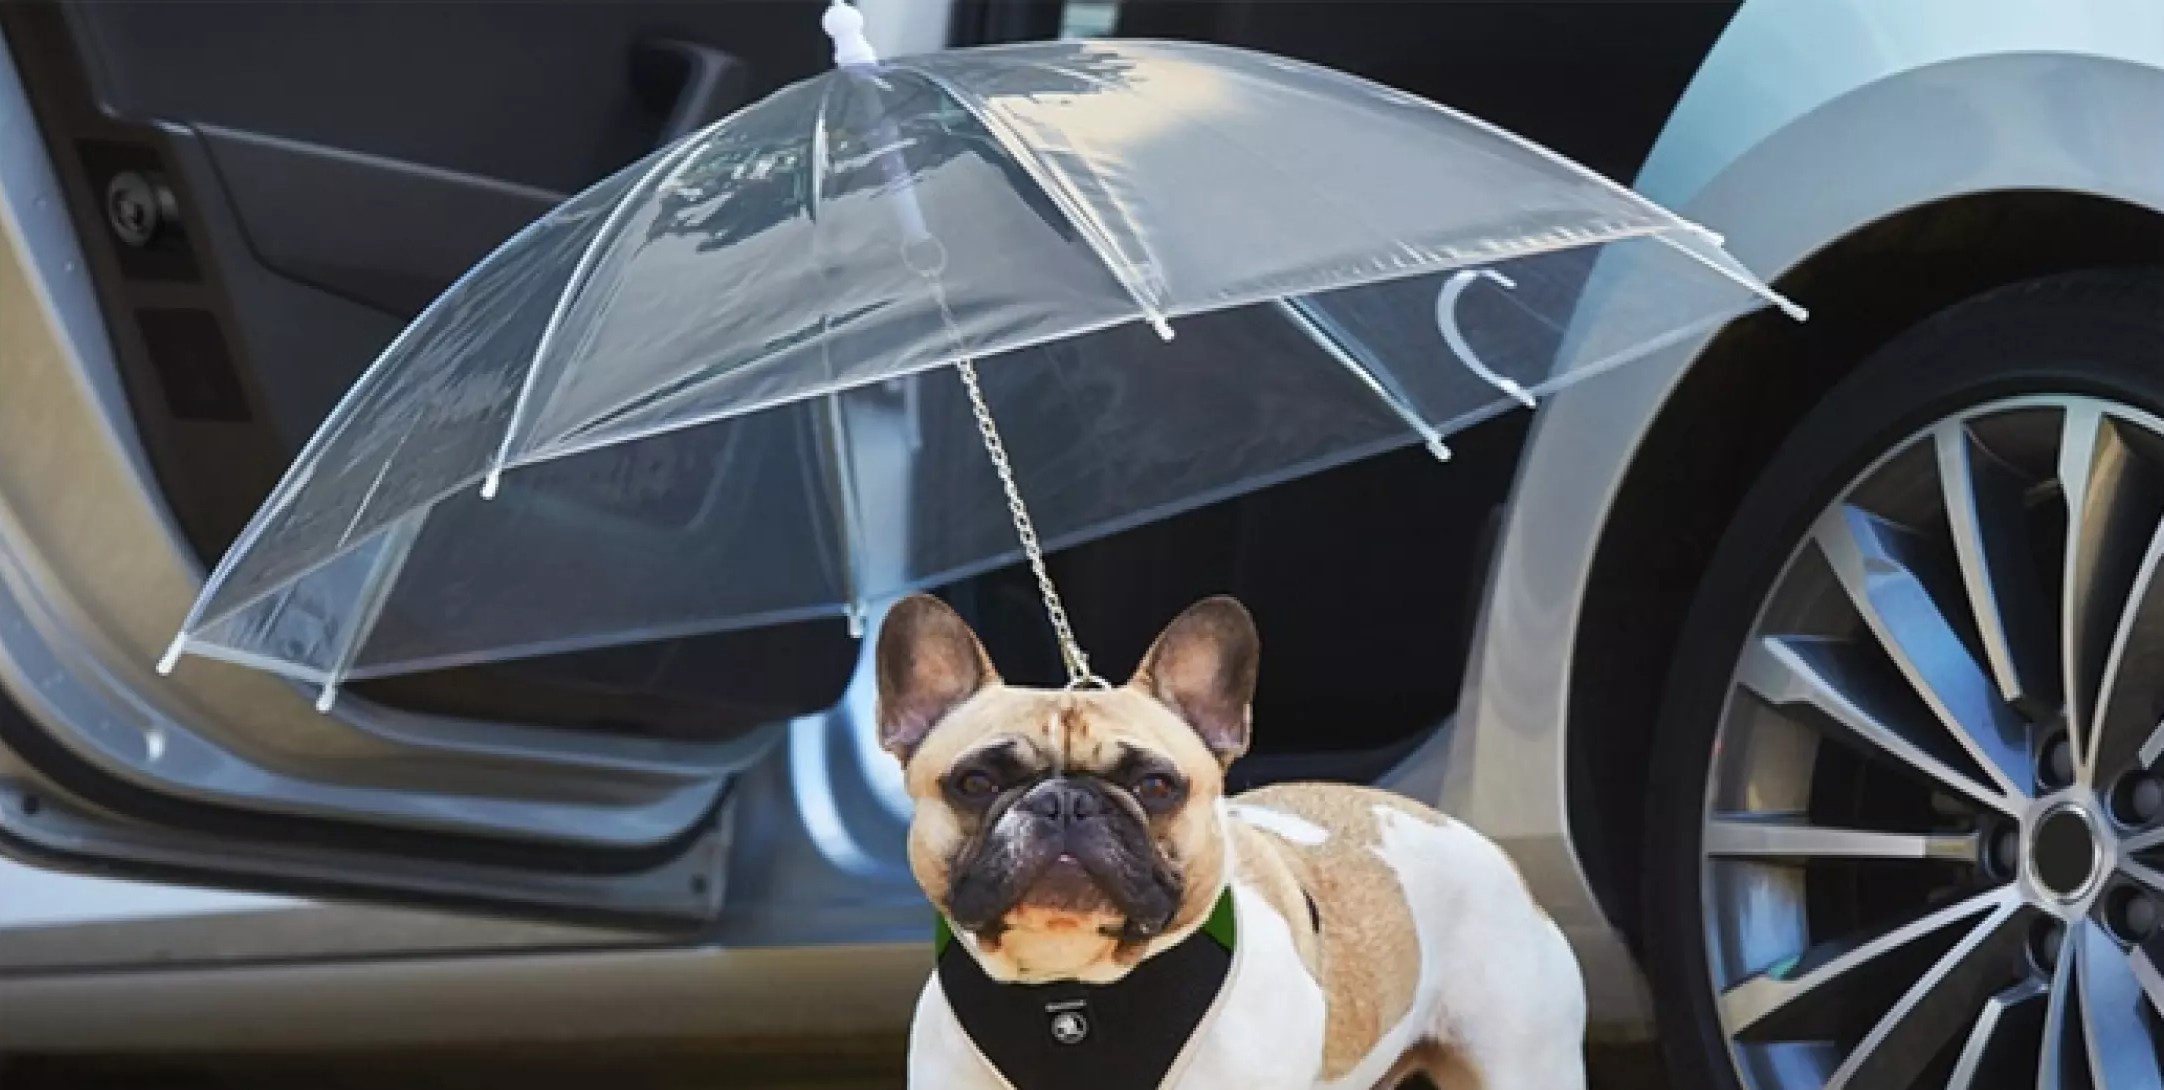 Impasse Modernisering puree Deze geniale hondenriem + paraplu is nu te koop op Amazon | MAN MAN